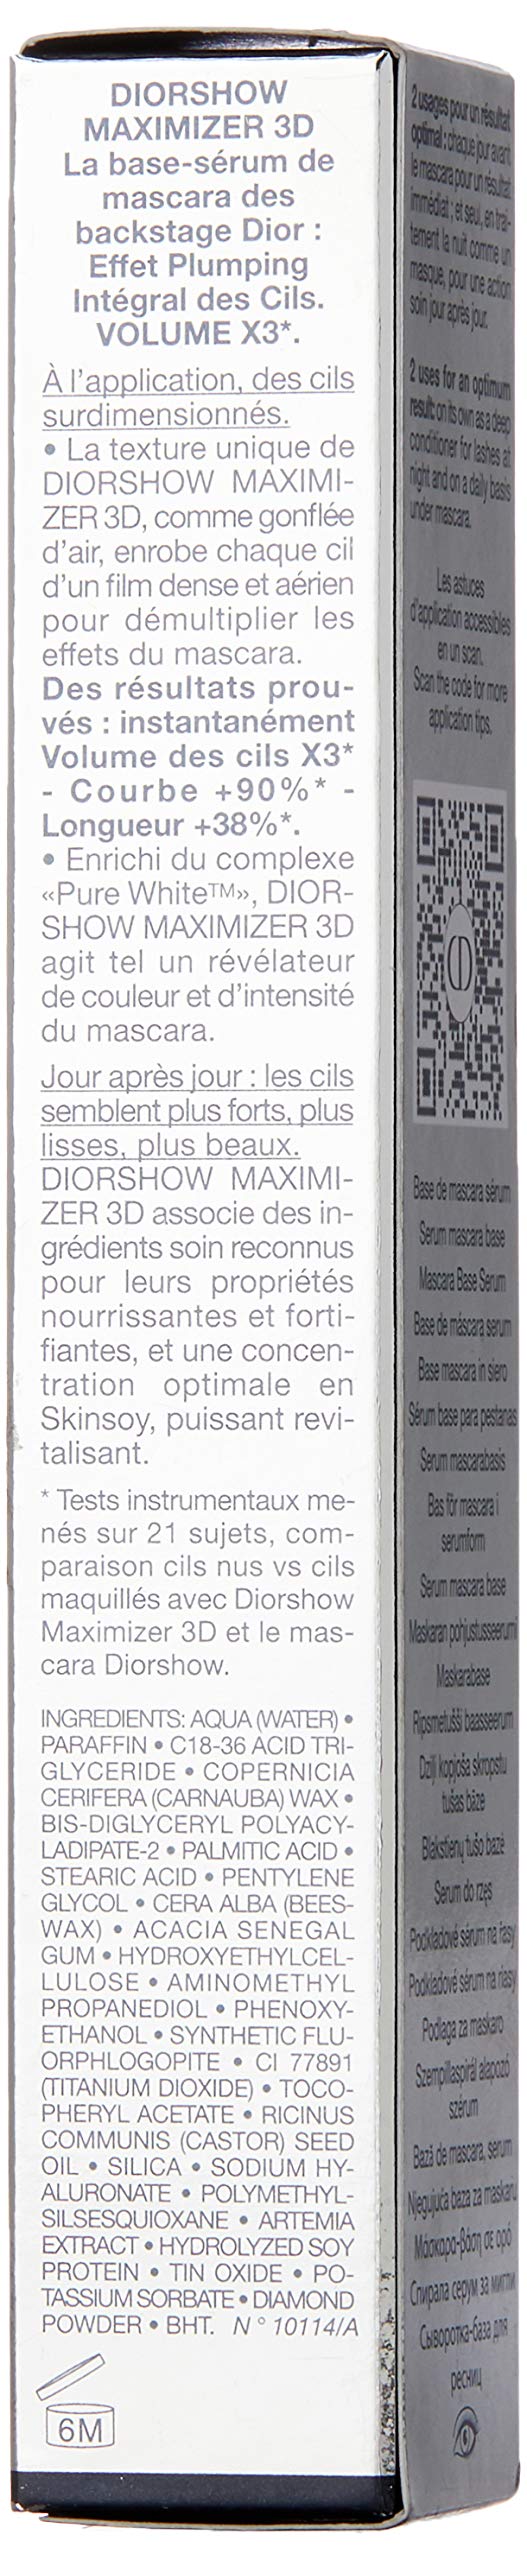 Dior Diorshow Maximizer 3d Lash Primer Sample 4 Ml for sale online  eBay